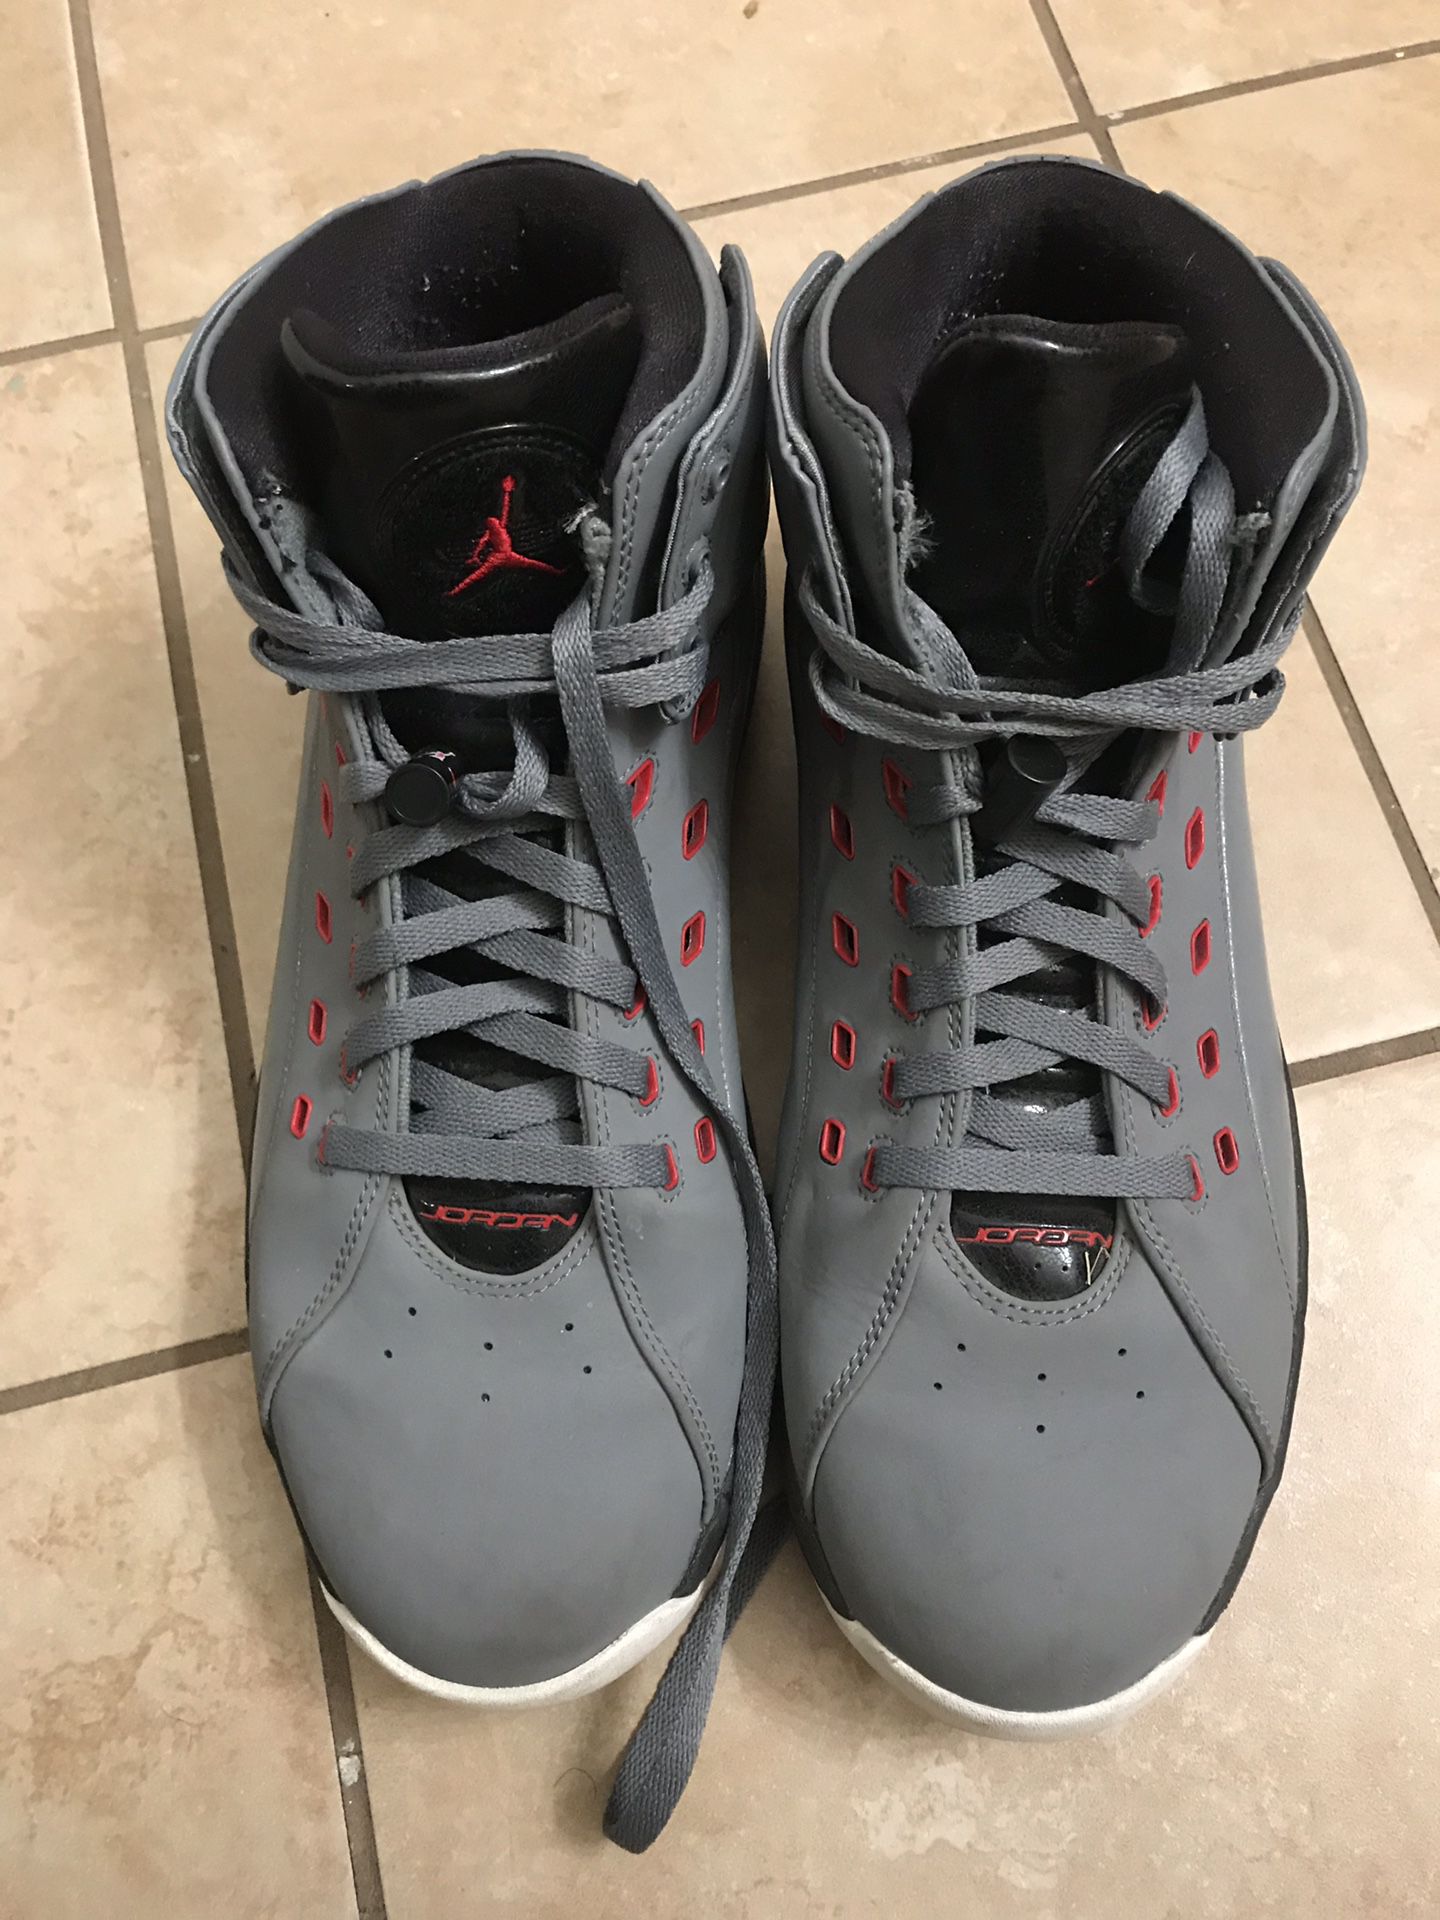 Men Air Jordan size 13. Manufactured 3/15